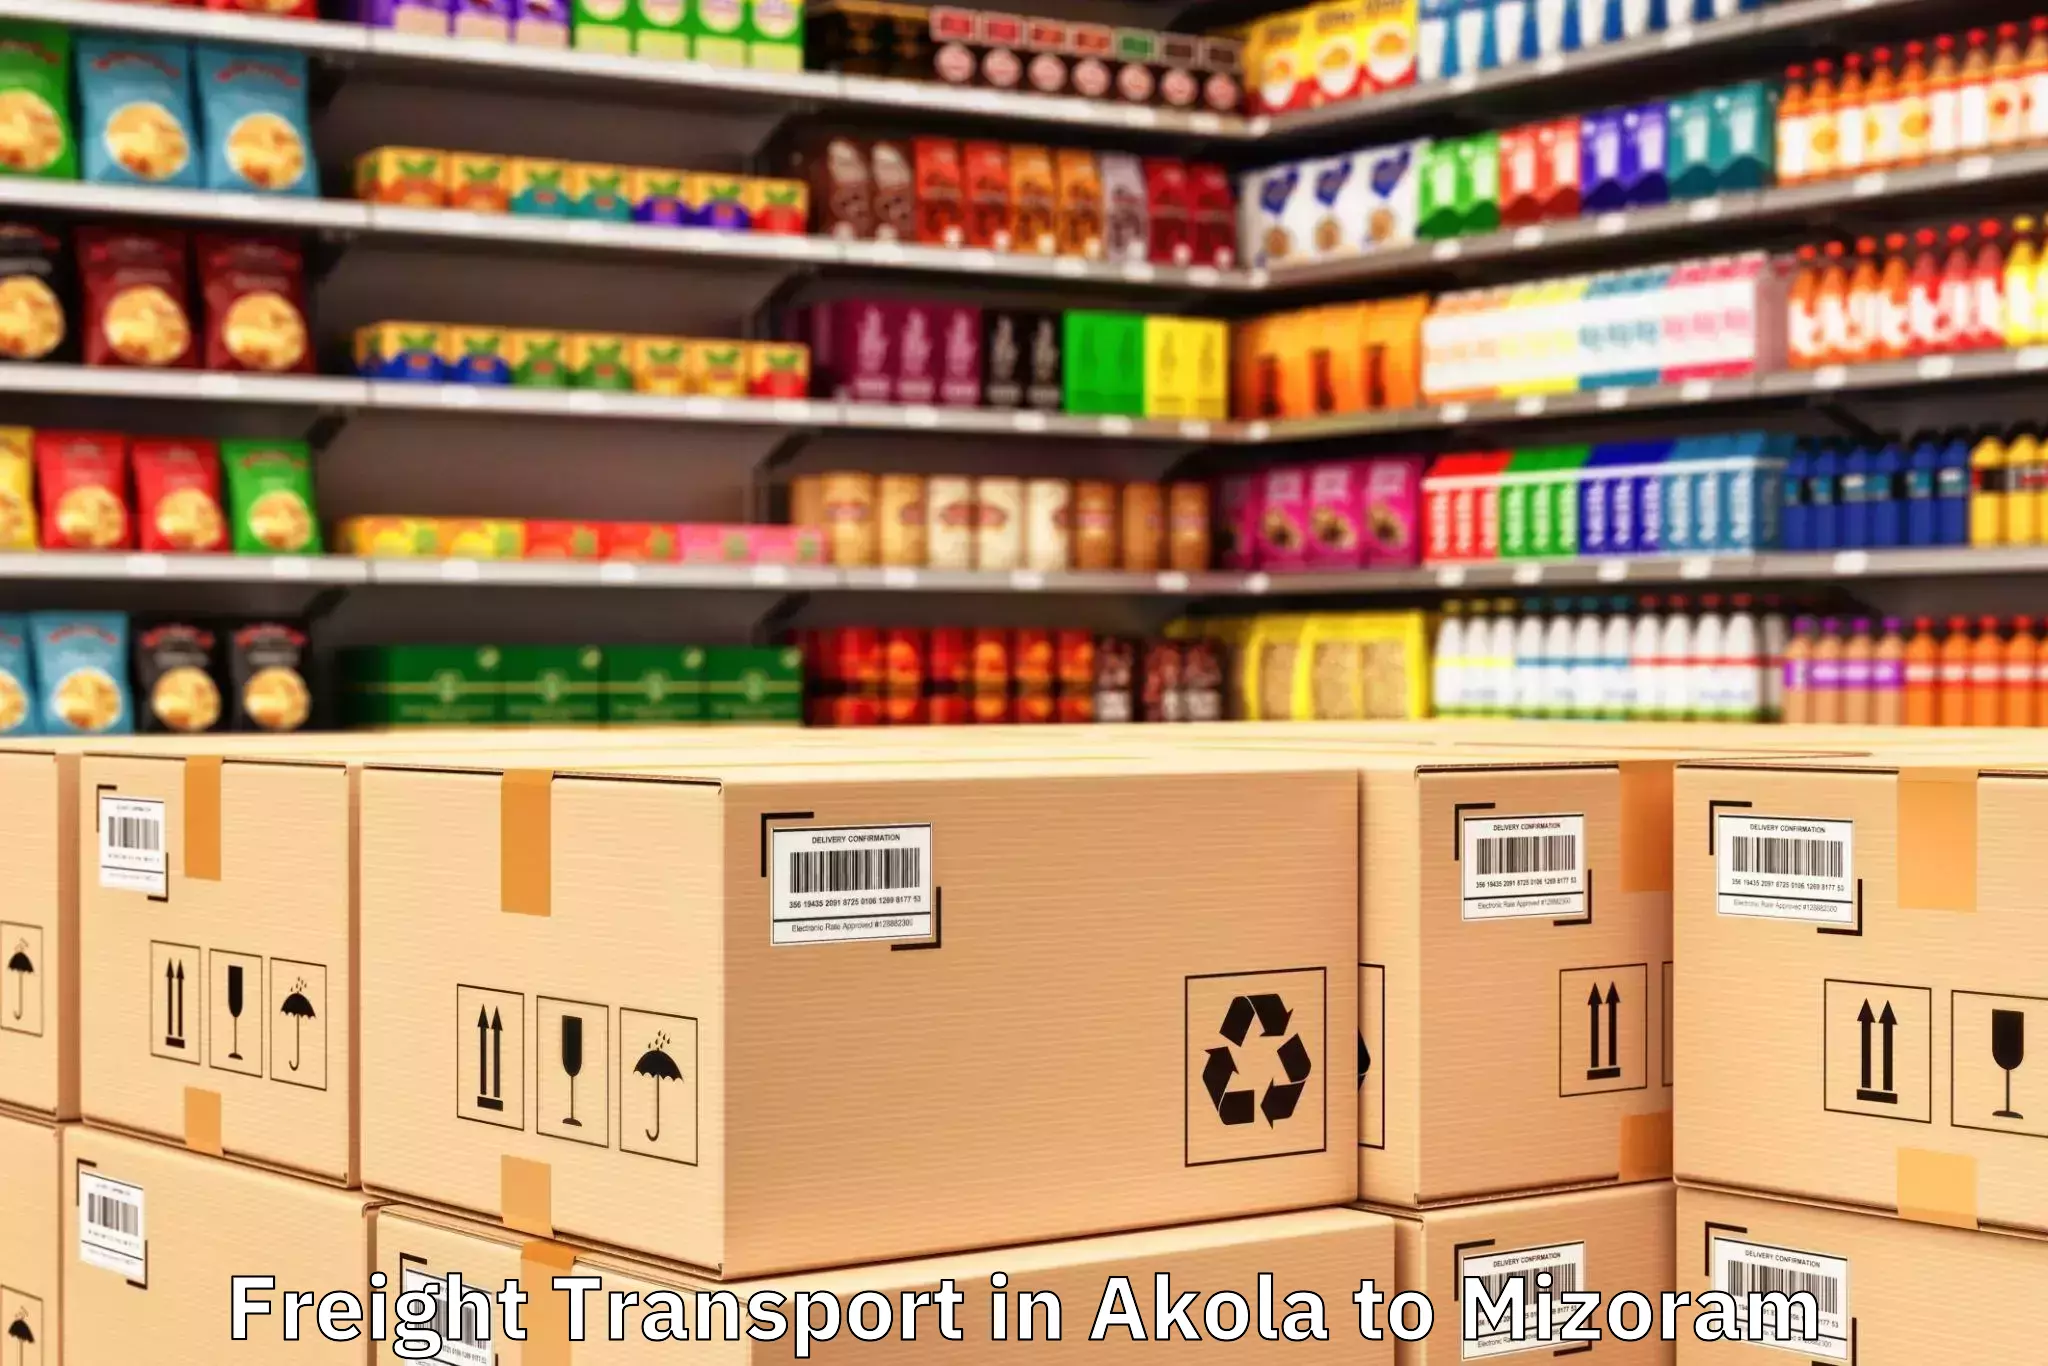 Efficient Akola to Mizoram Freight Transport